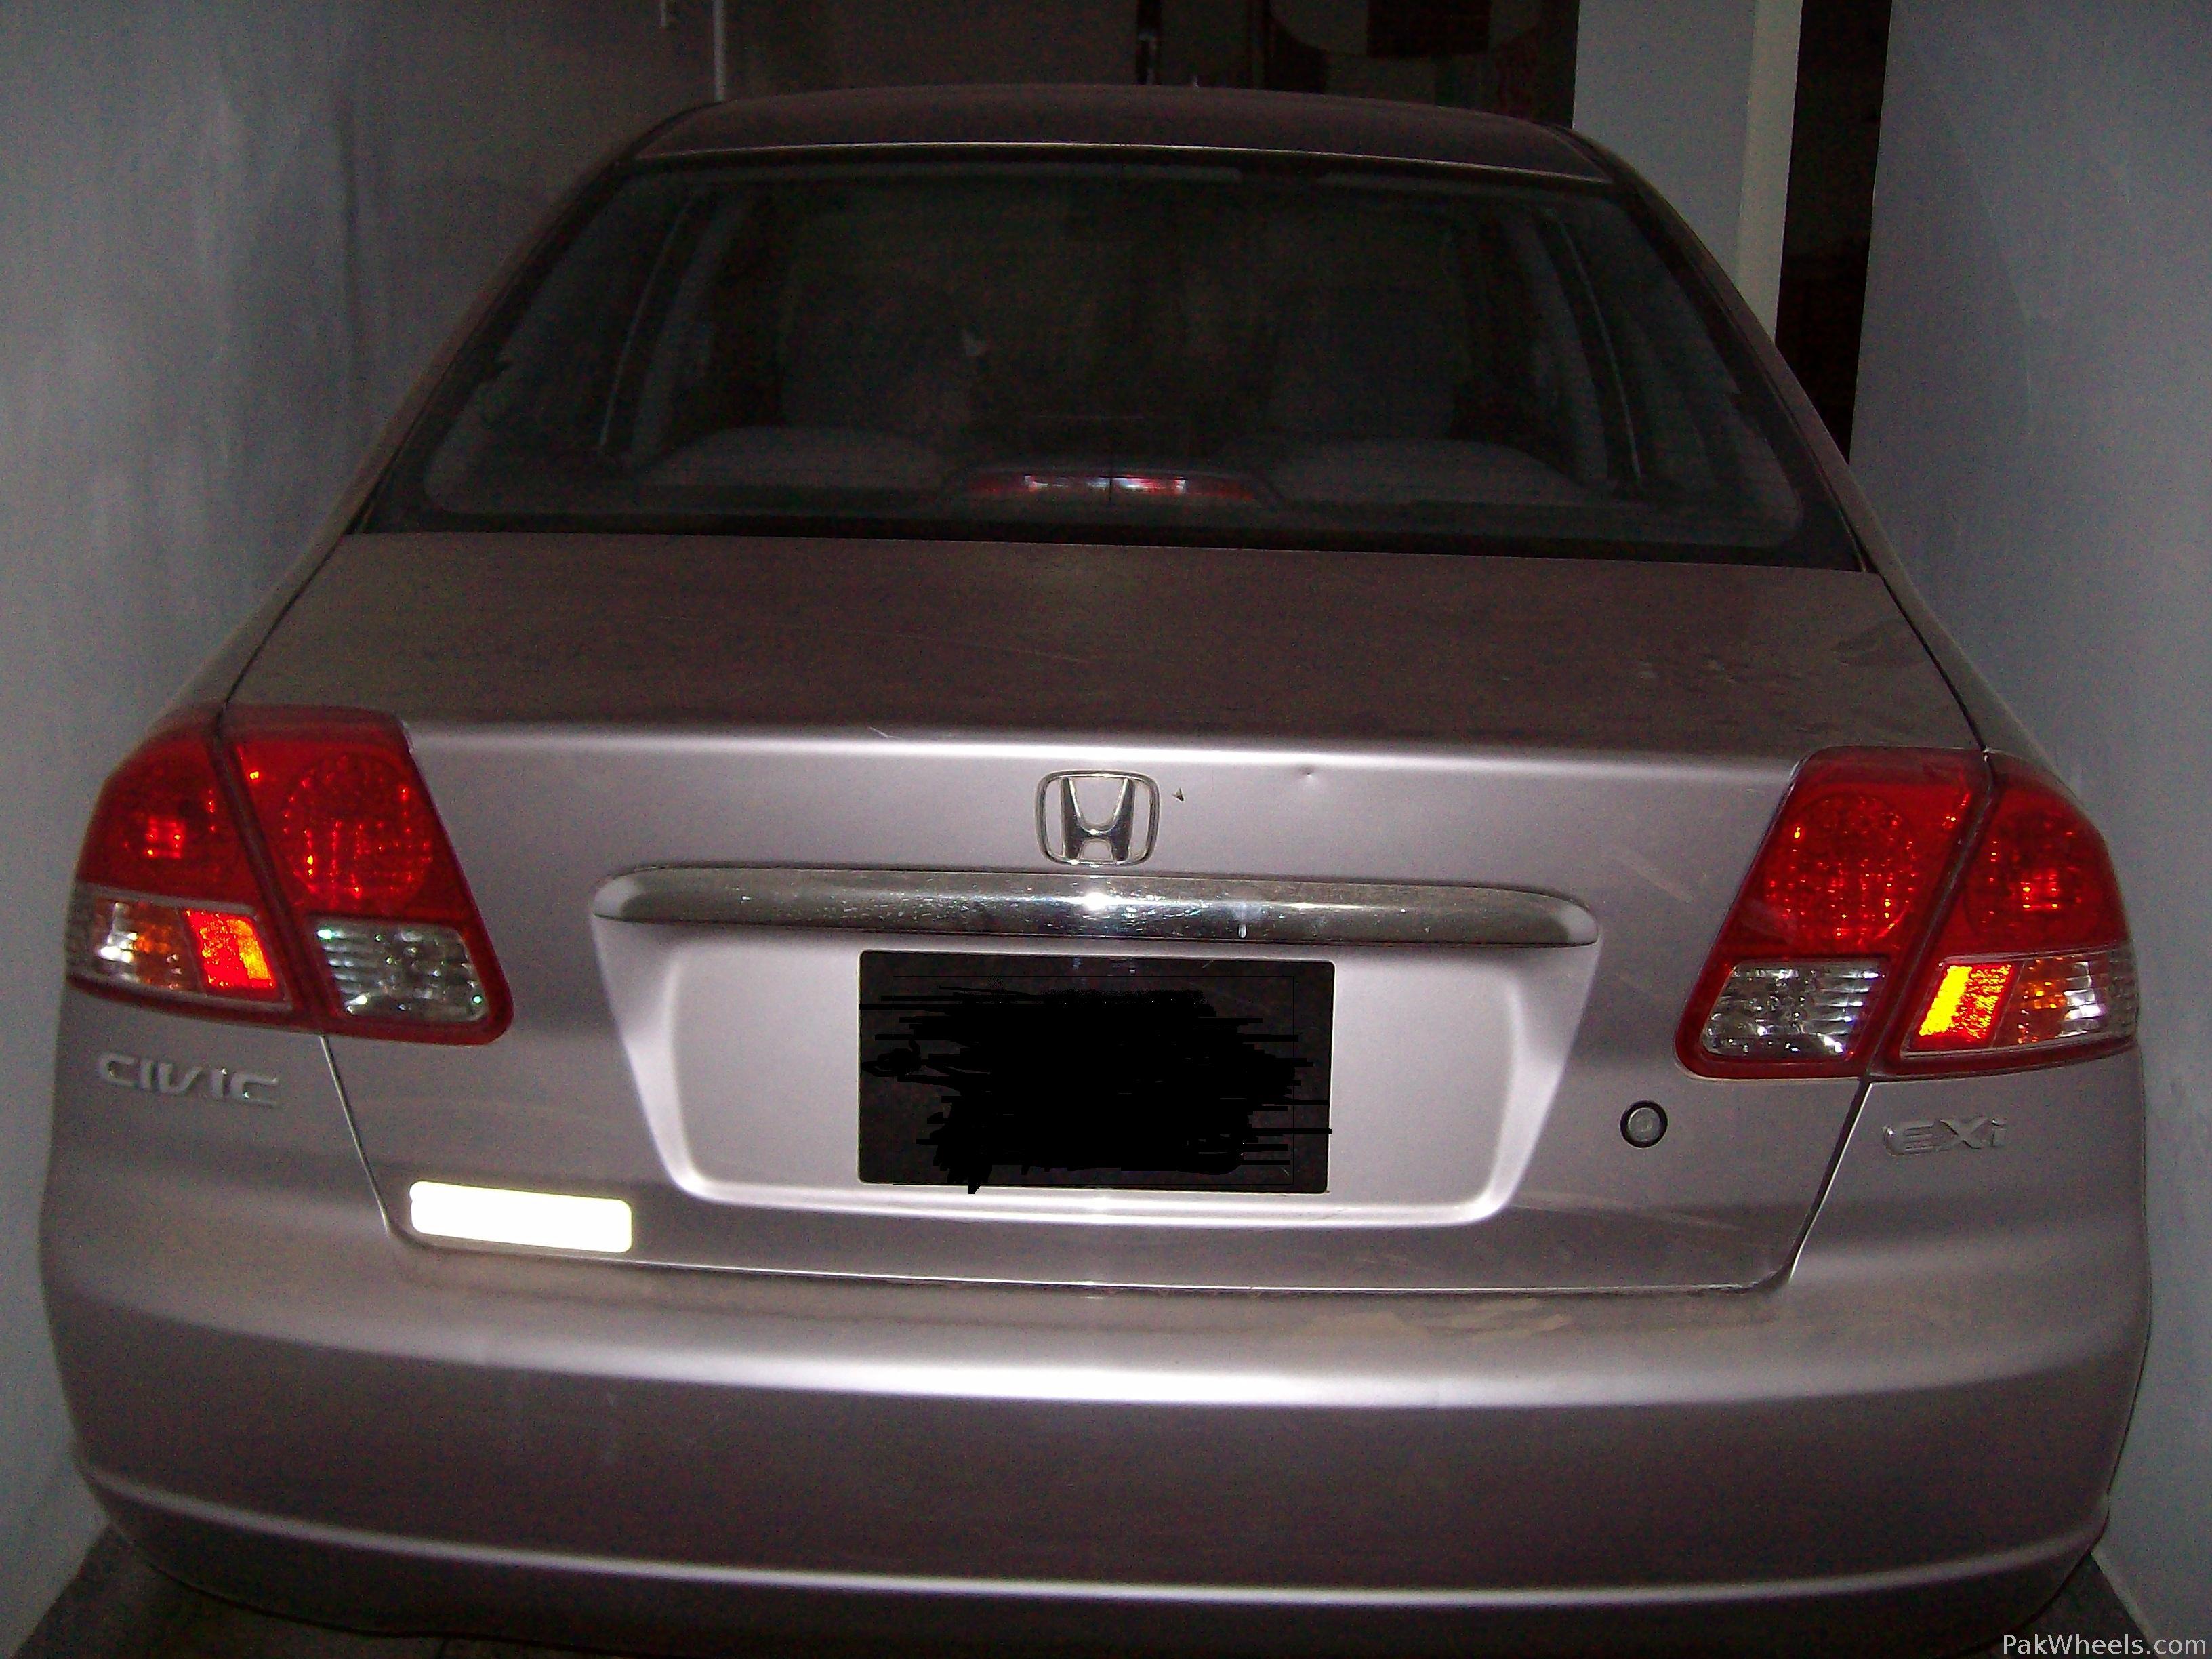 Honda Civic - 2002 waboo Image-1